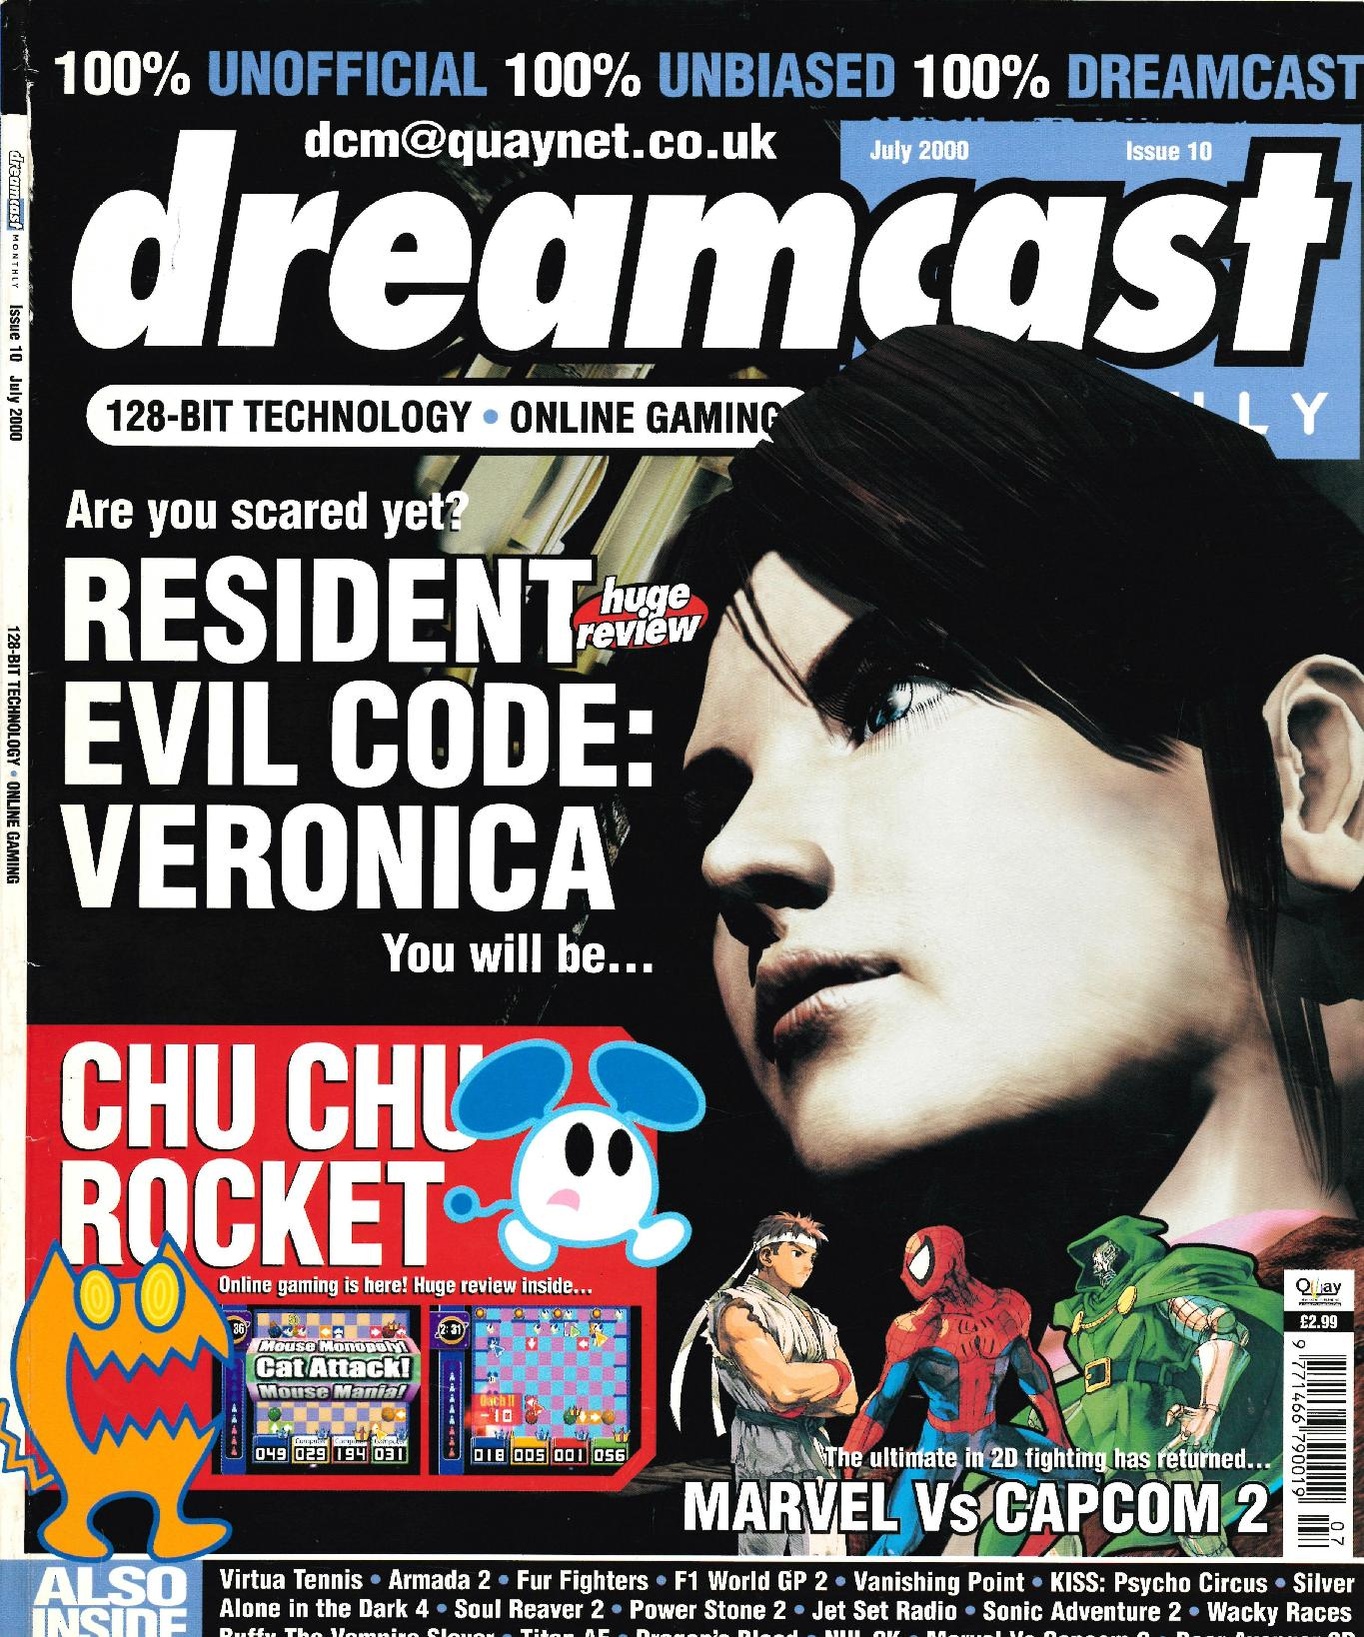 DreamcastMonthly UK 10.pdf